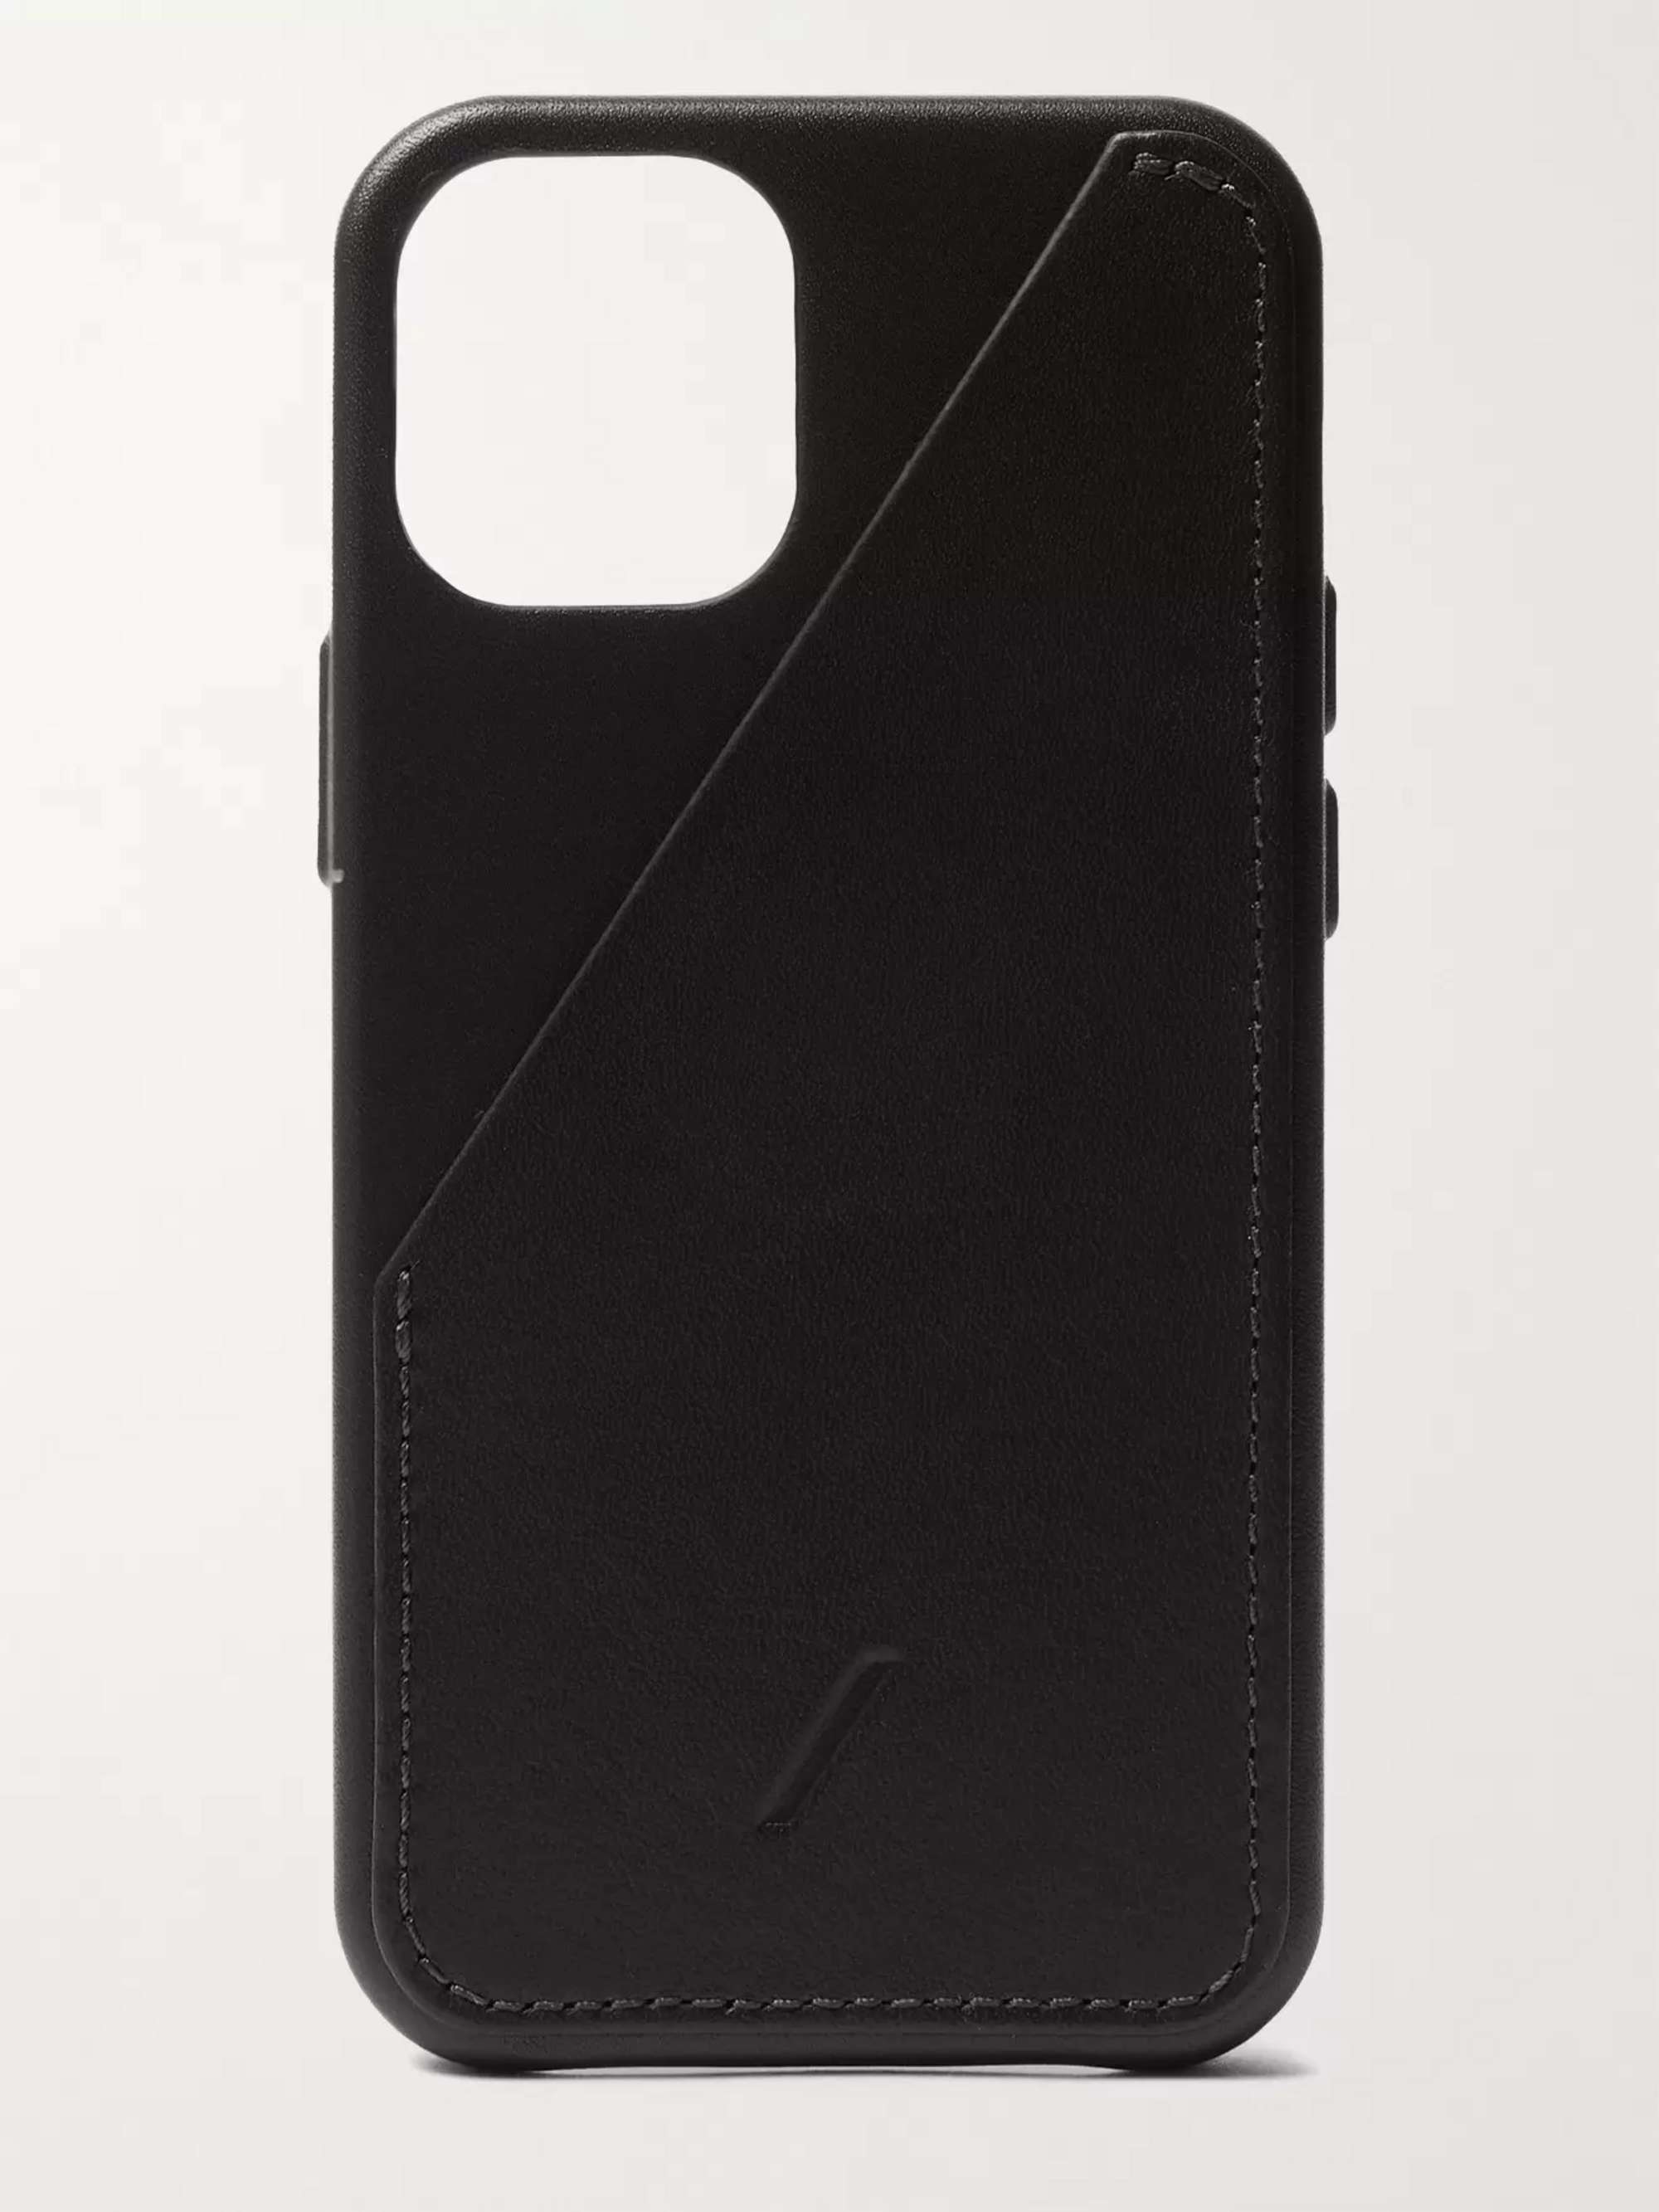 NATIVE UNION Clic Card Leather iPhone 12 Mini Case for Men | MR PORTER